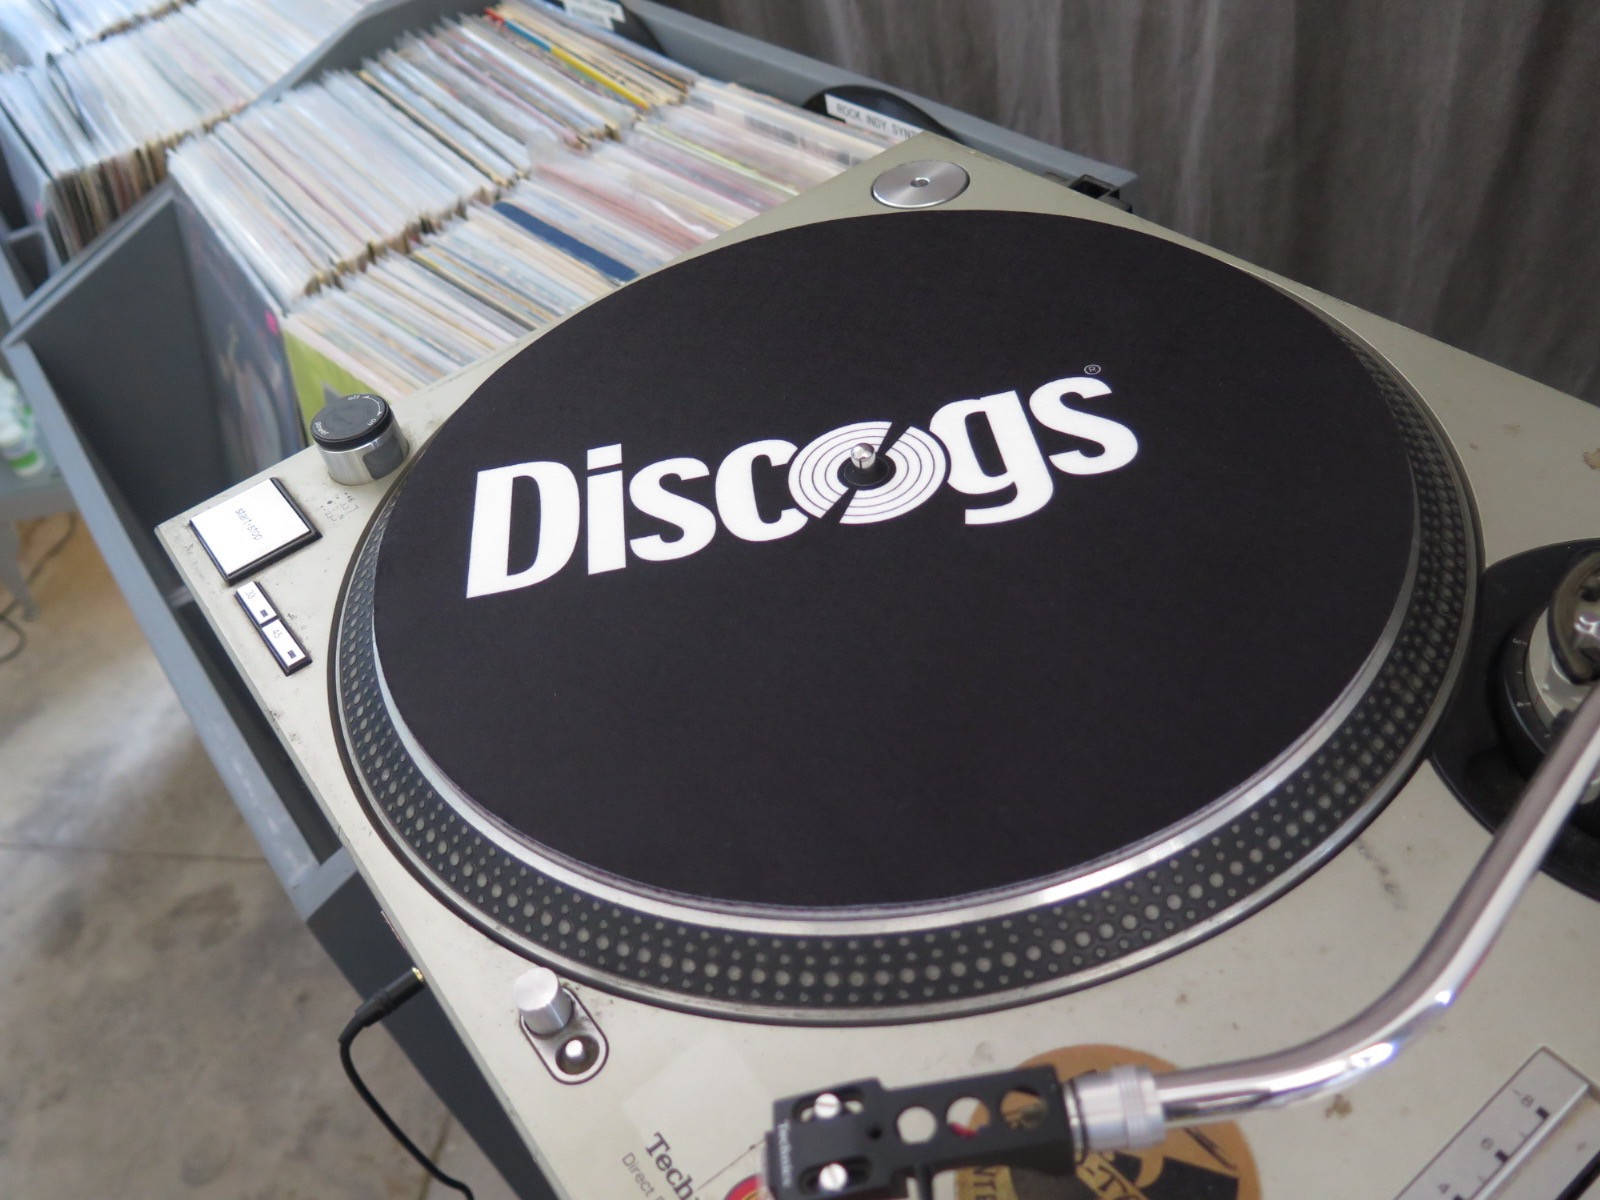 Discogs com. Discogs. Дискокс. Дискогс винил. Discogs logo.